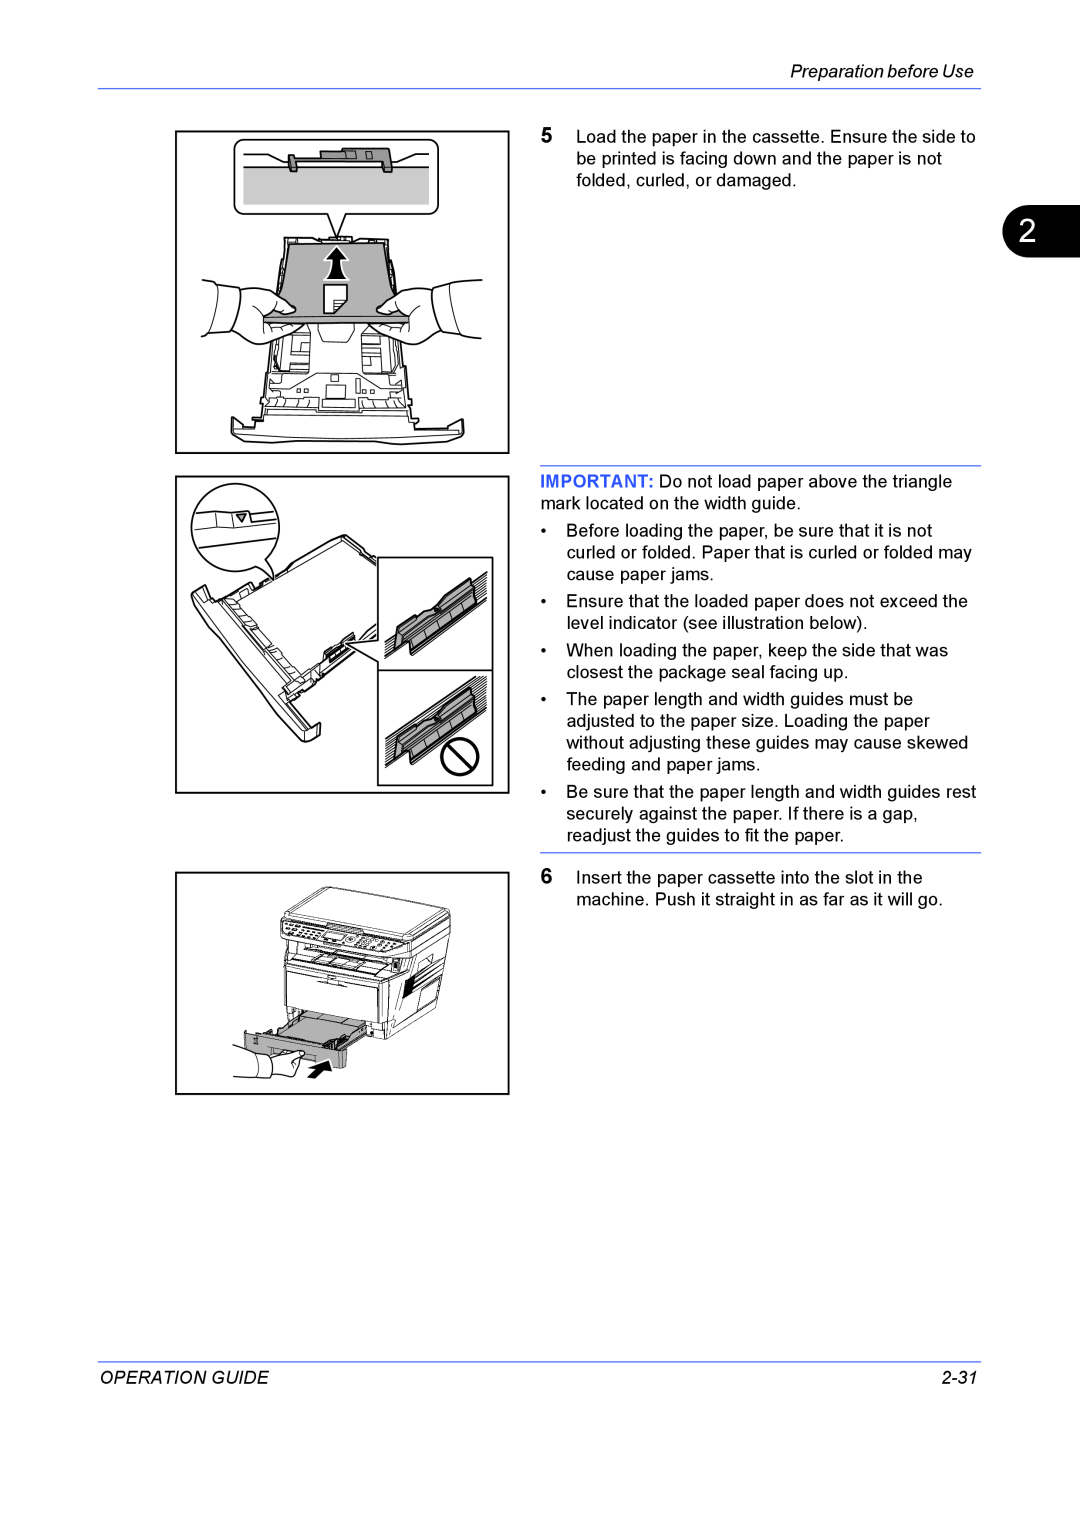 Kyocera FS-1128MFP, FS-1028MFP manual Preparation before Use, Operation Guide, 2-31 